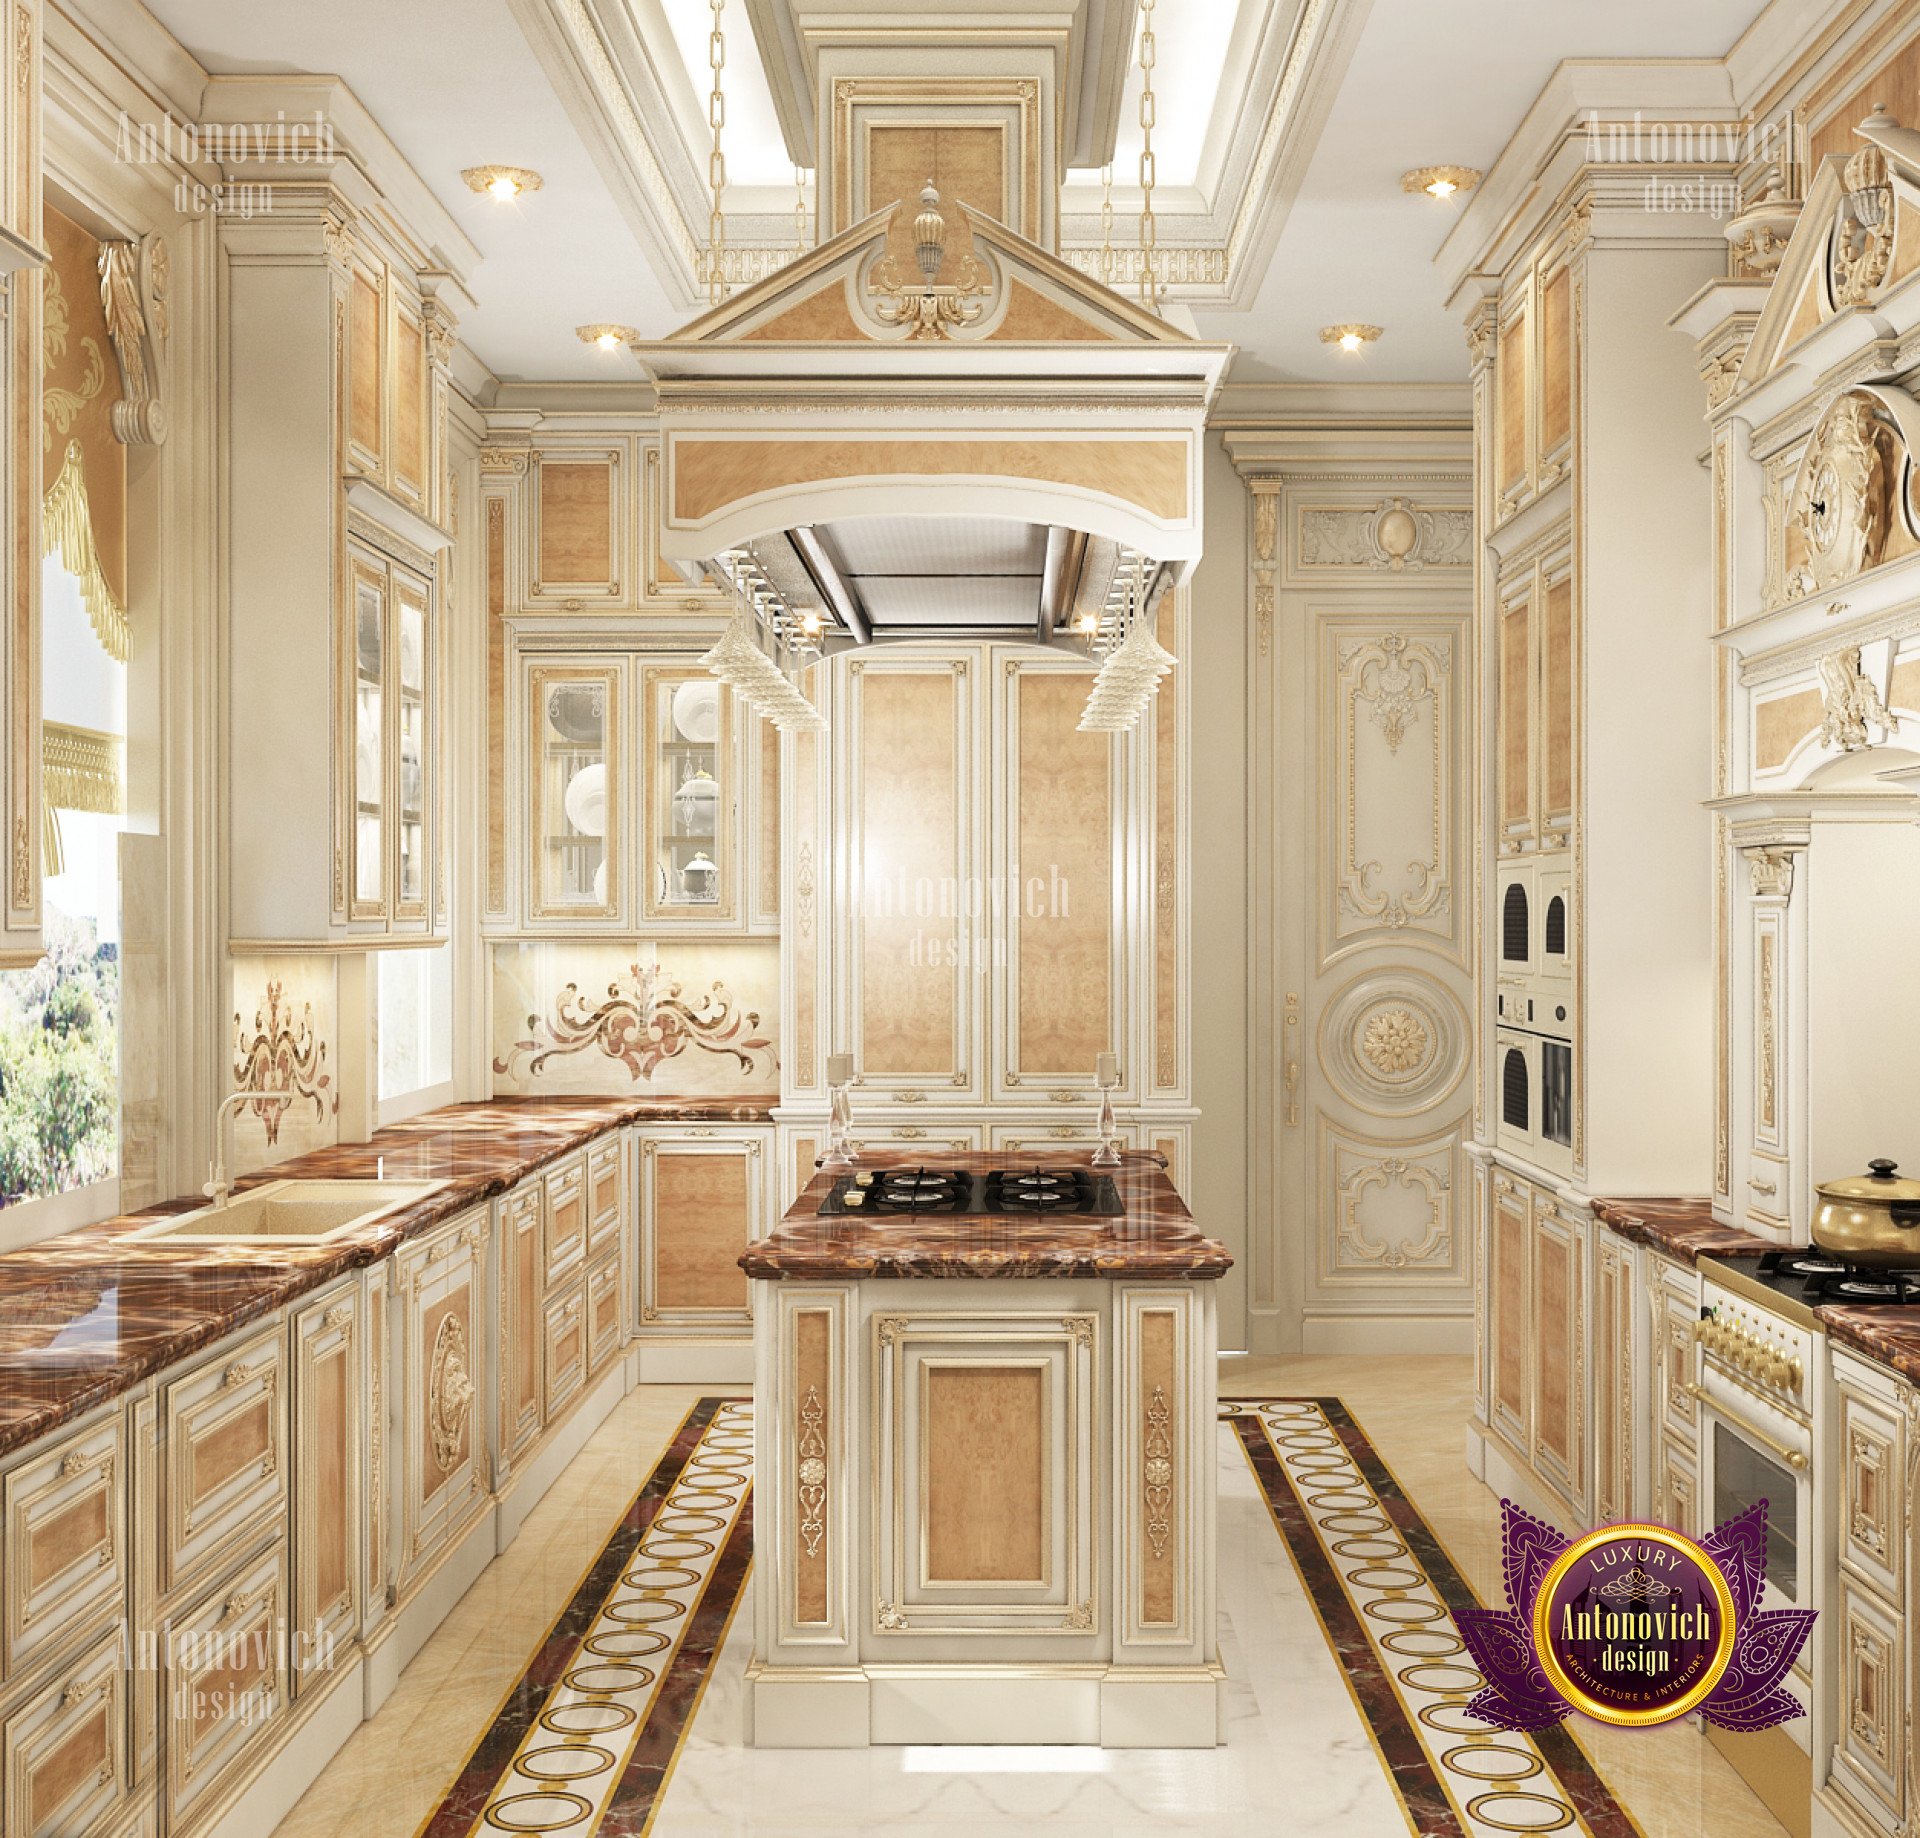 Luxury kitchen design - luxury interior design company in California